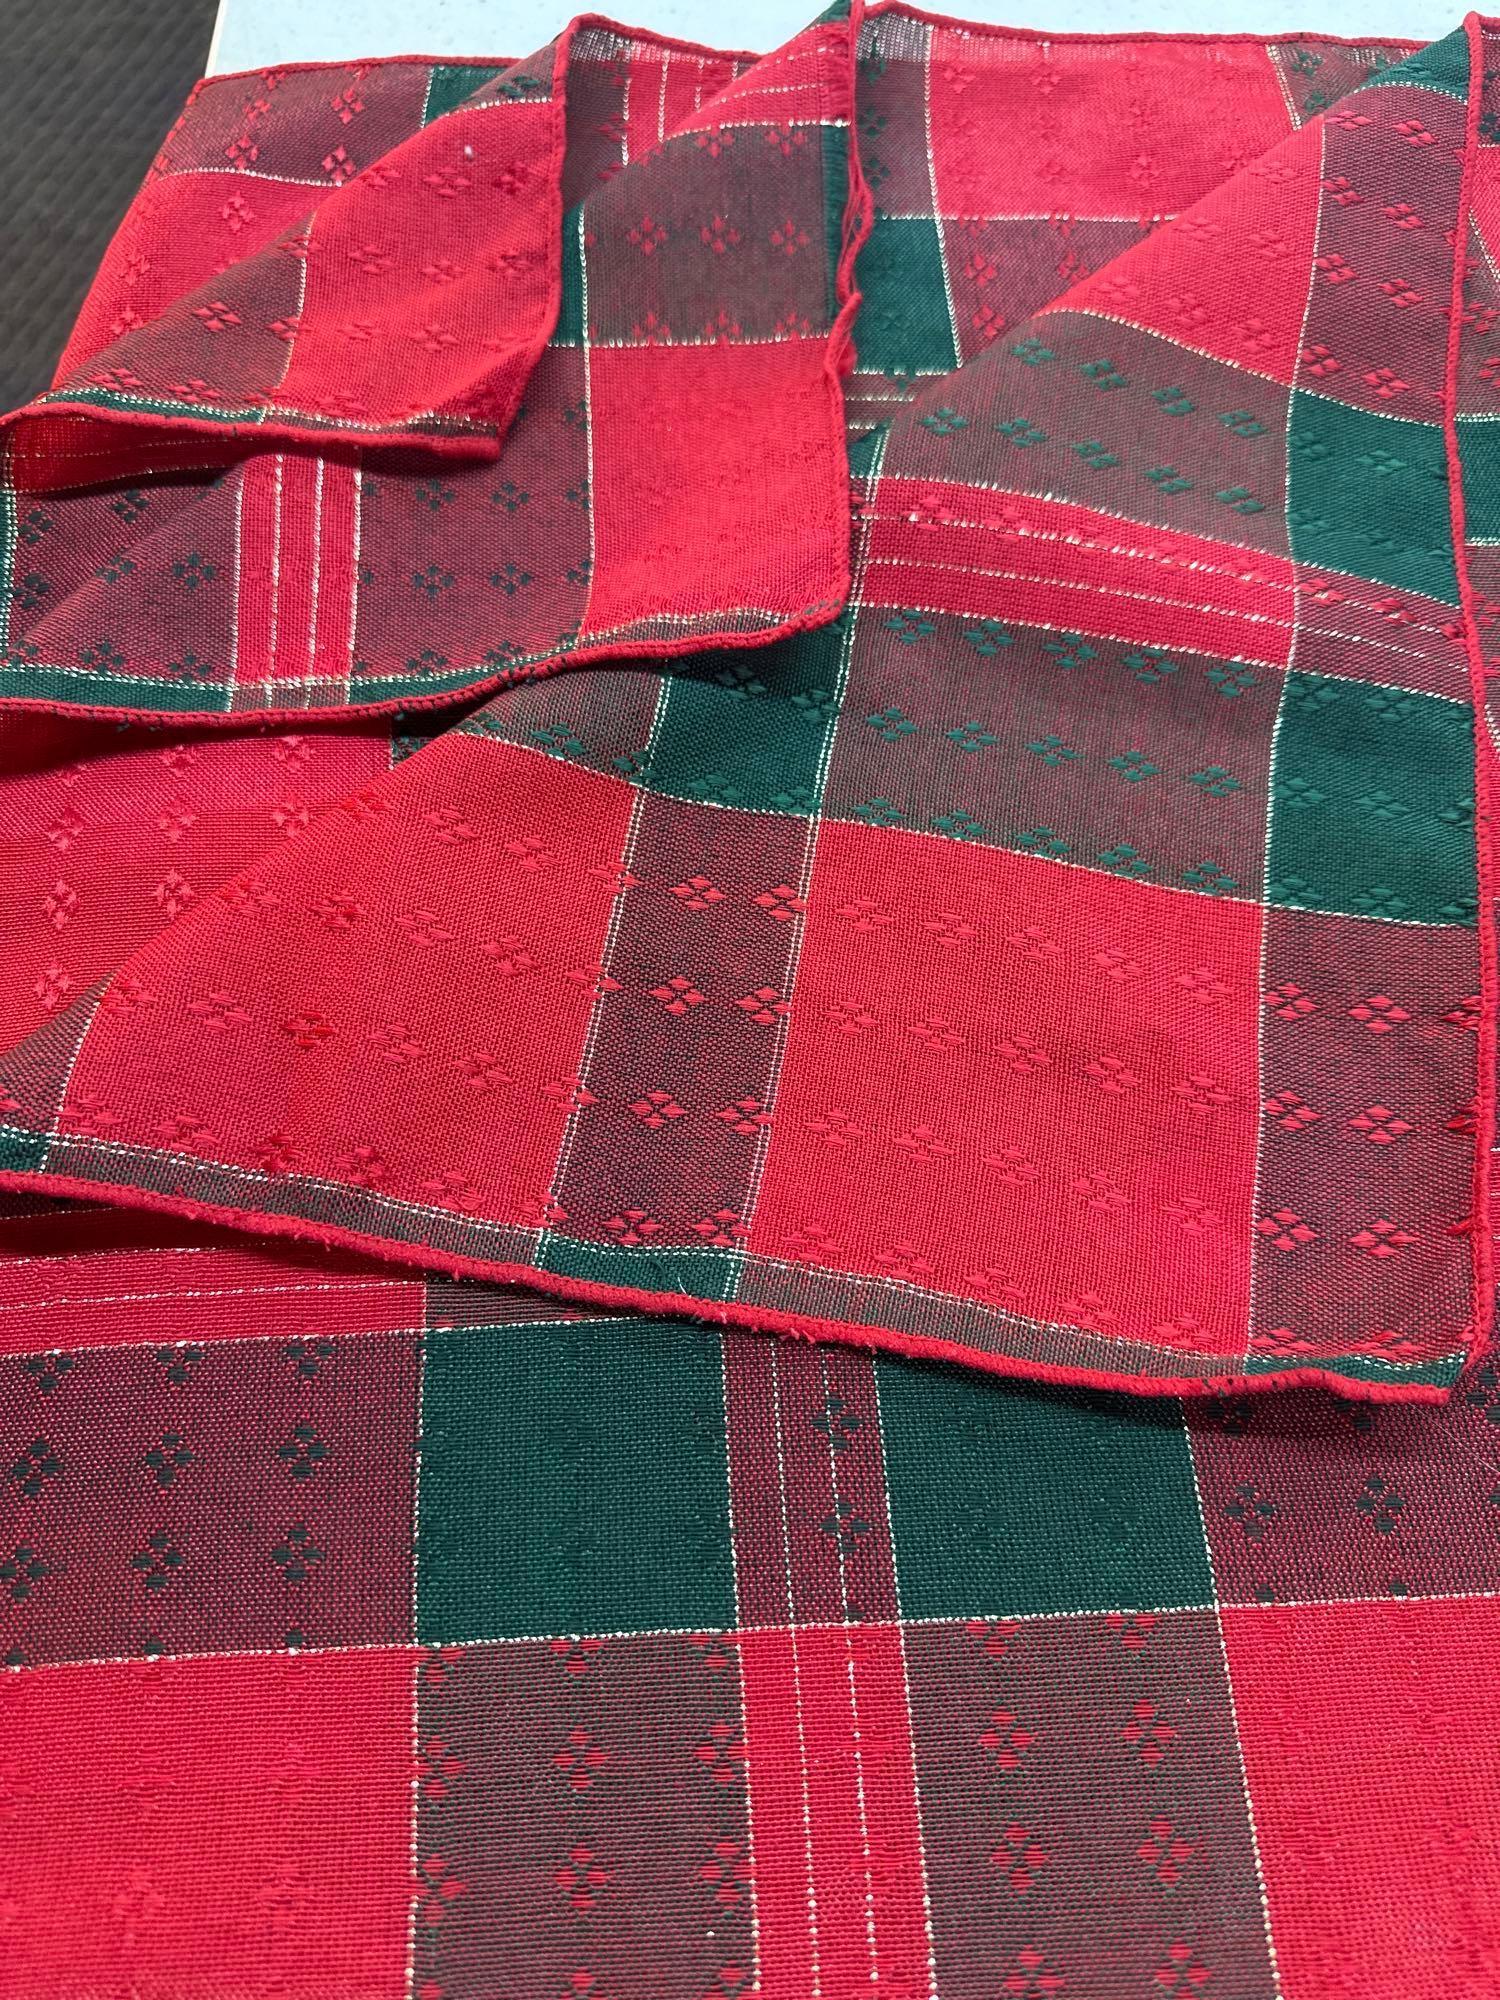 2 Christmas Tablecloths